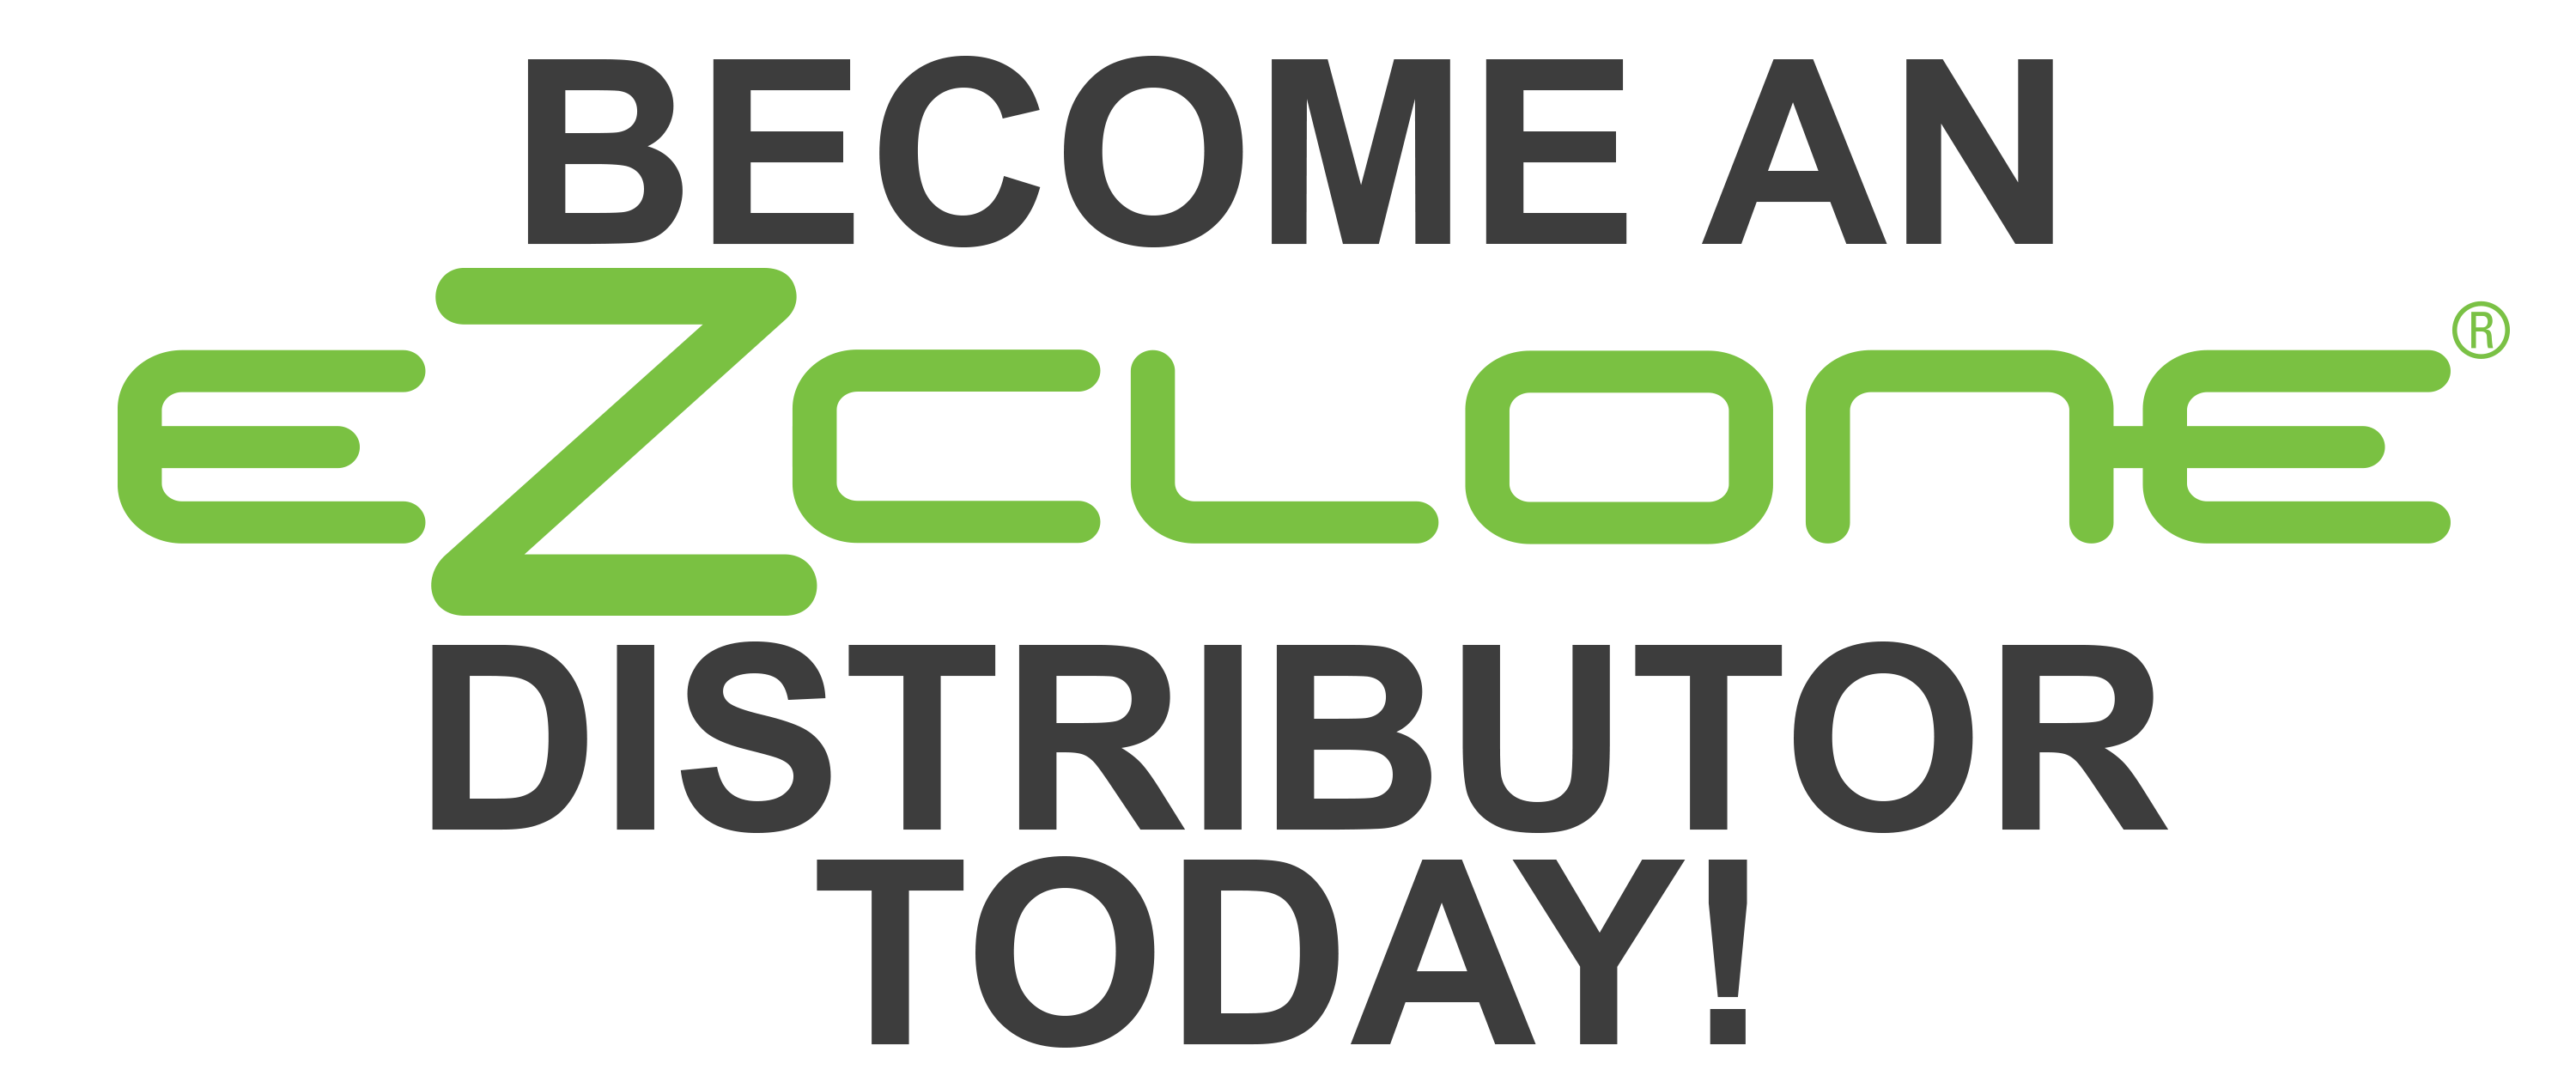 Become a distributor today!